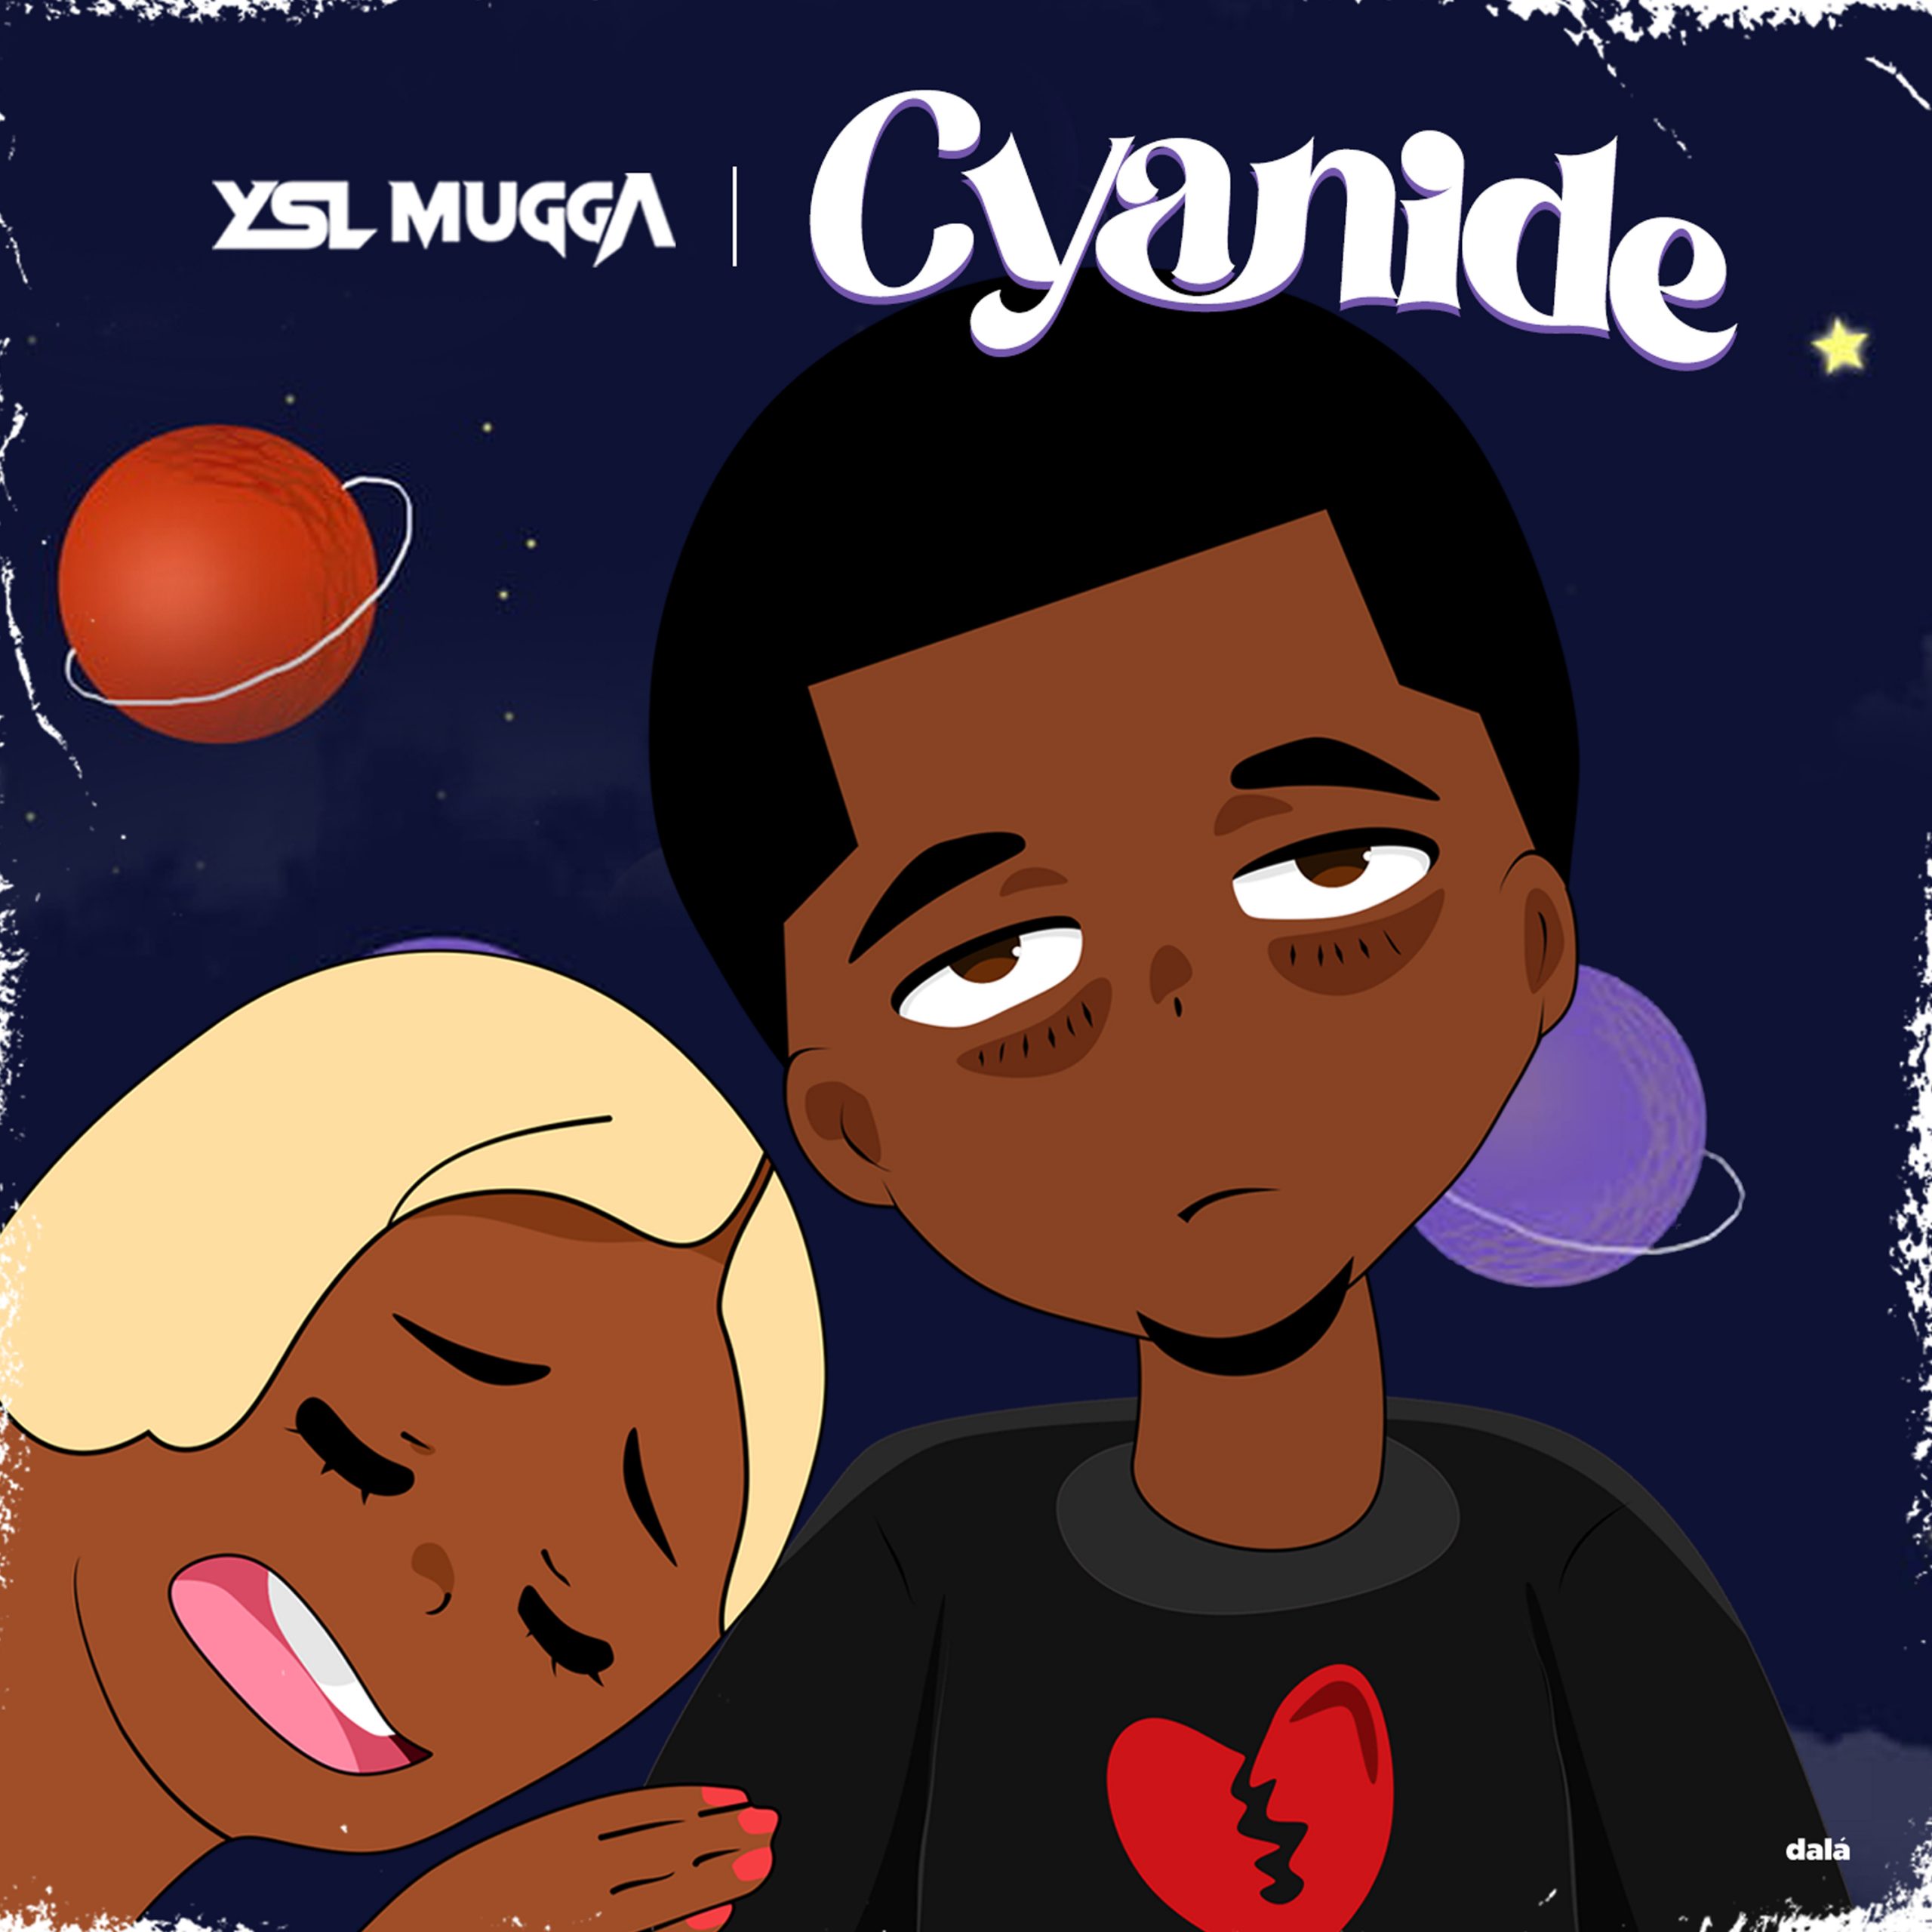 YSL Mugga – Cyanide